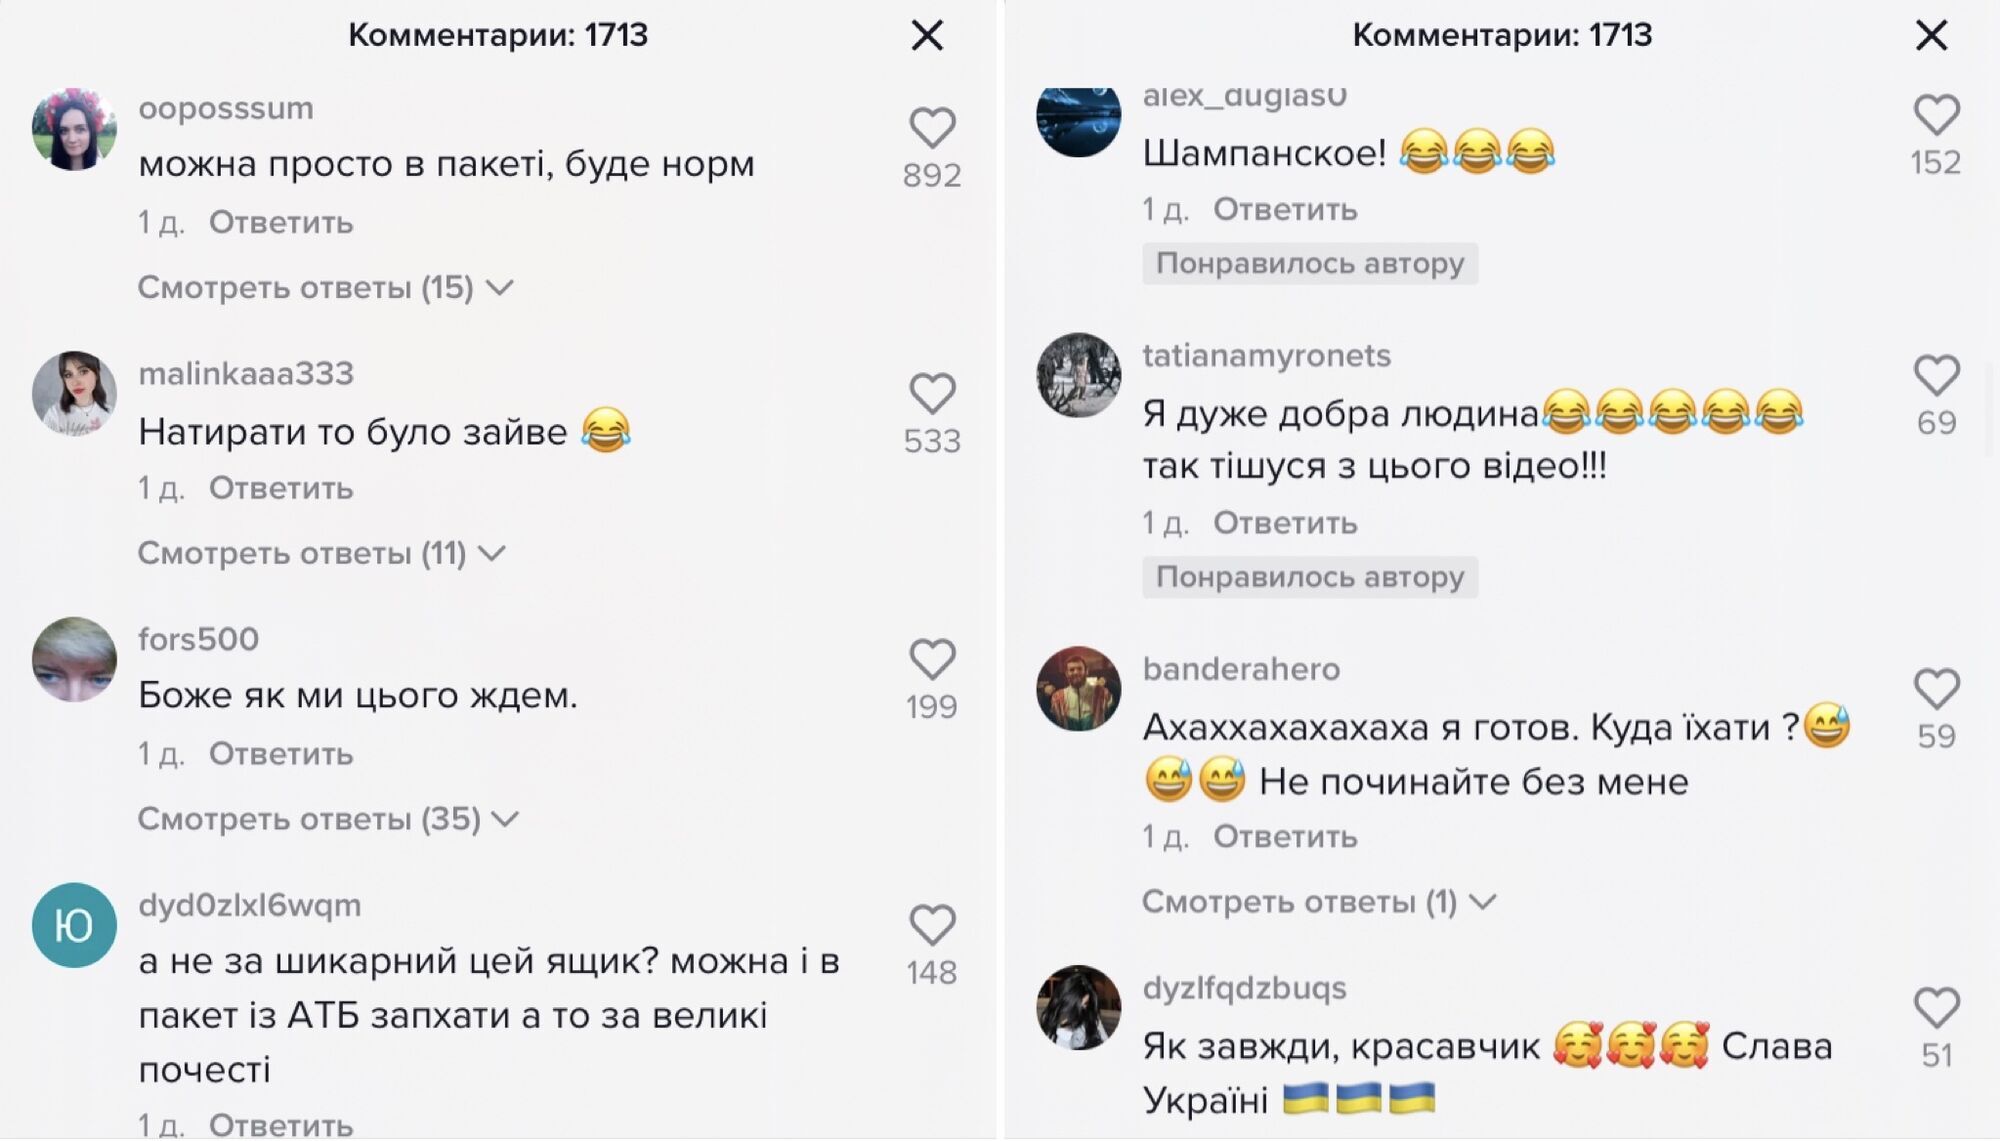 Комментарии под видео Александра Кучкова